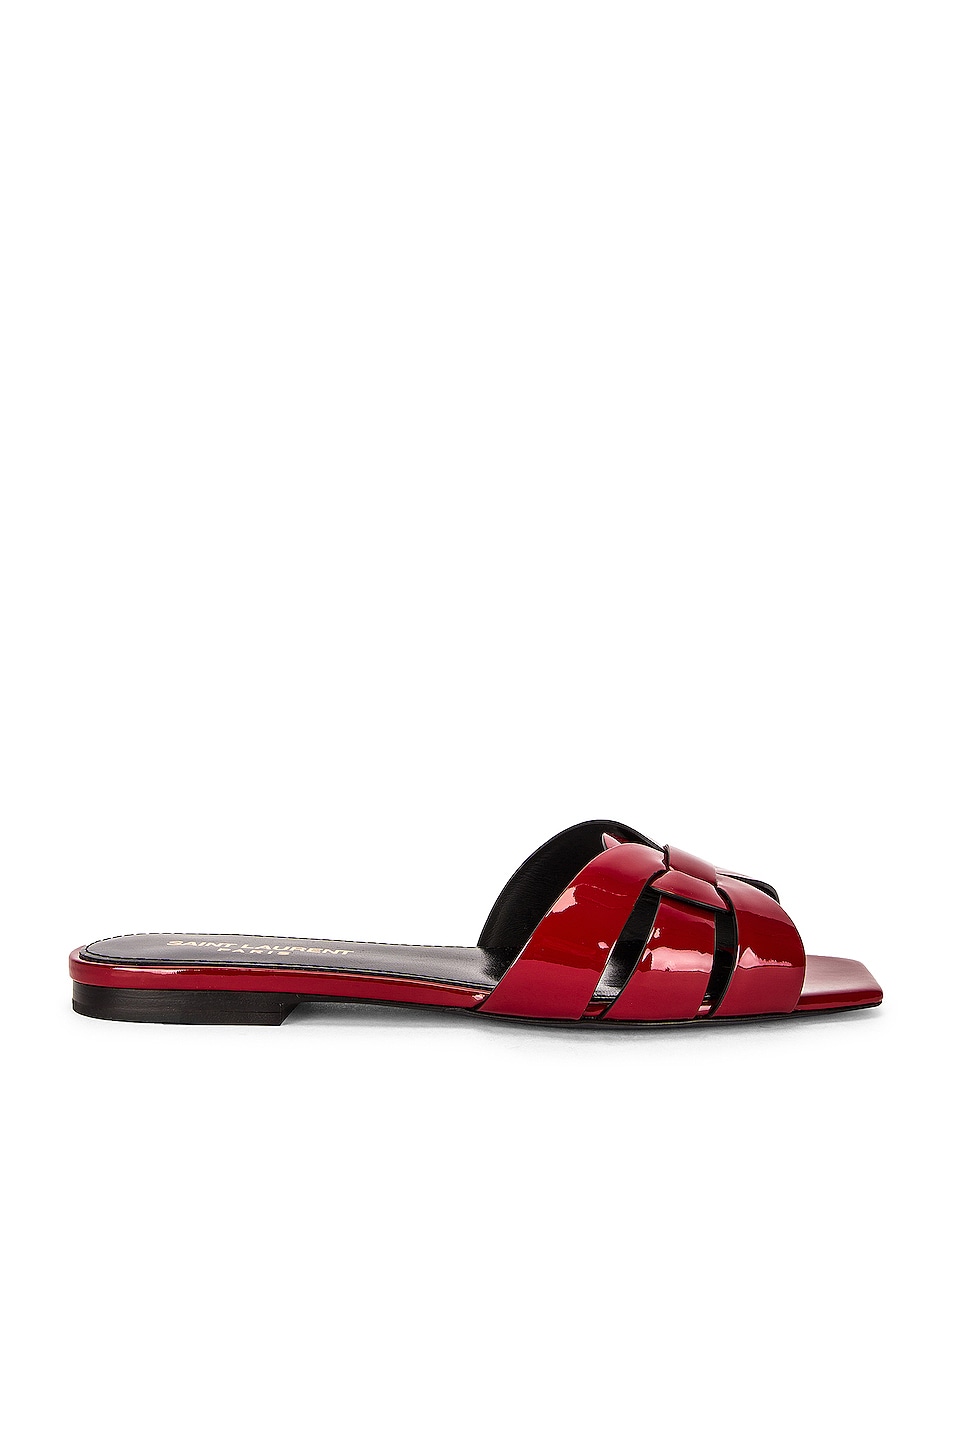 Saint Laurent Tribute Flat Sandals in Hot Red | FWRD